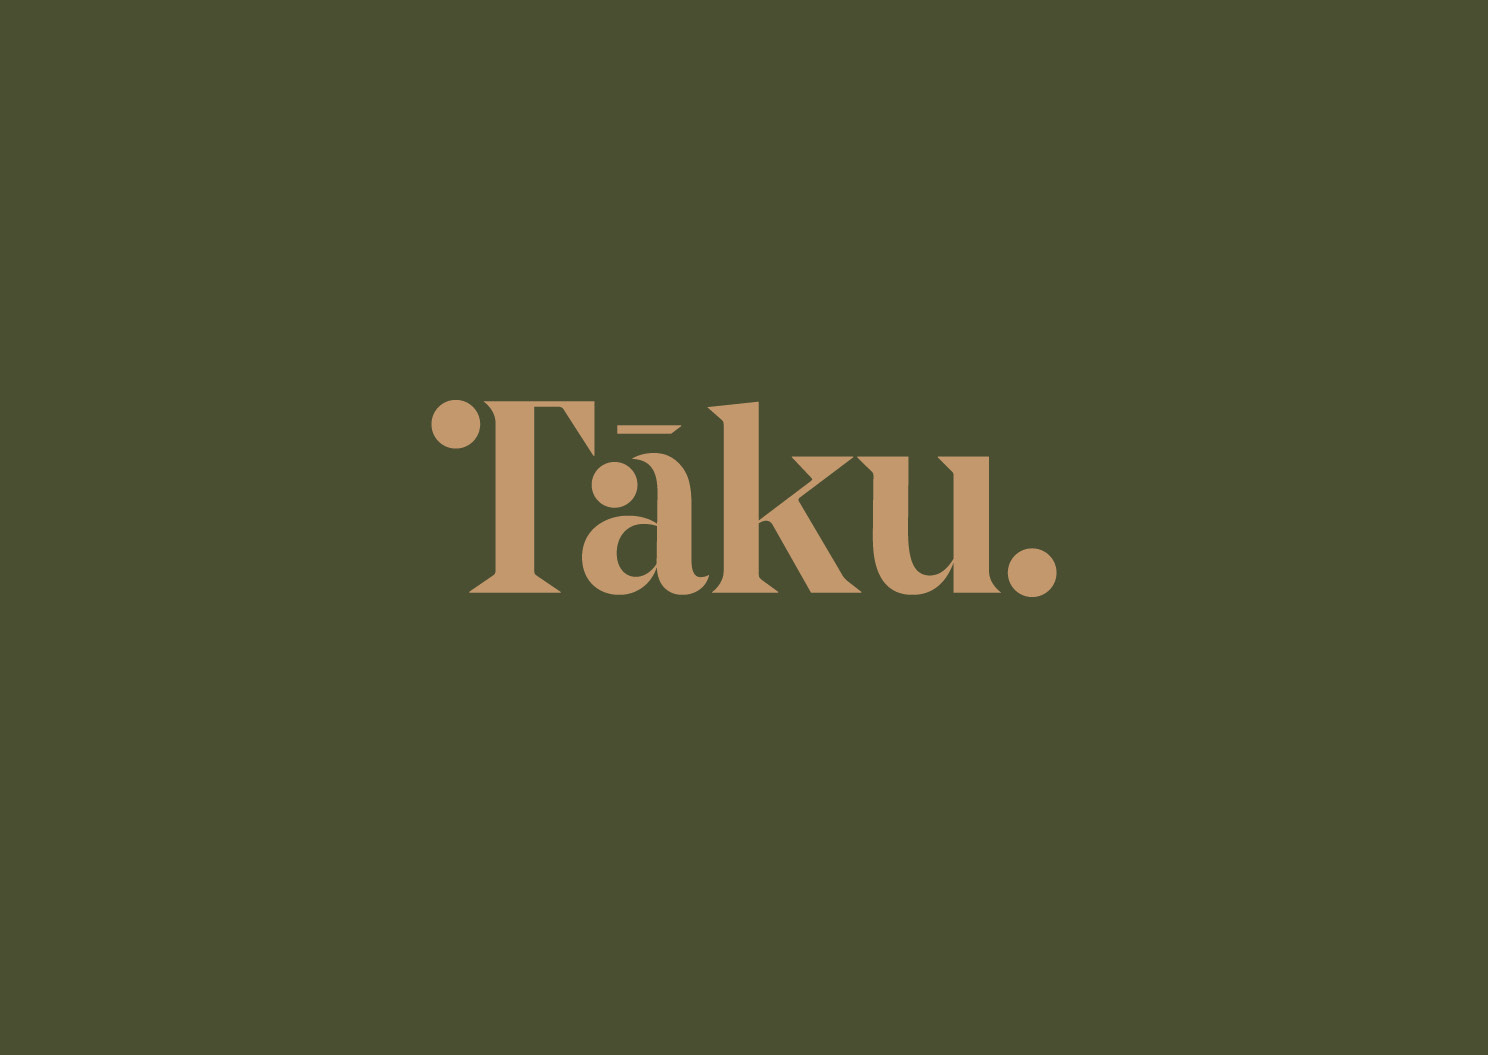 Taku logo